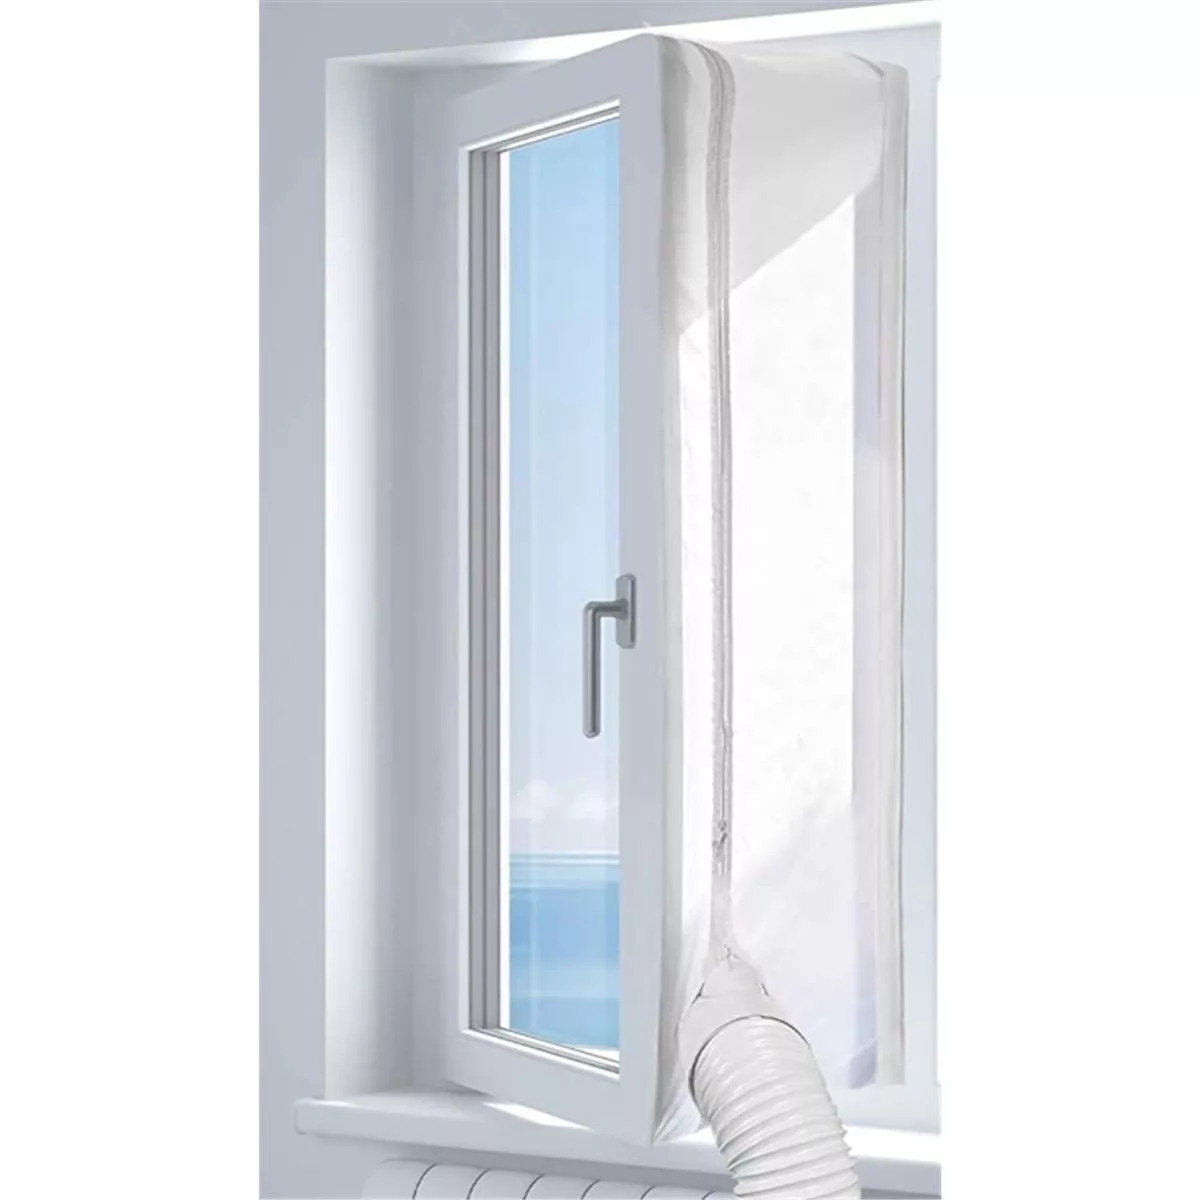 Fensterabdichtung als Warmluftsperre 4 Meter